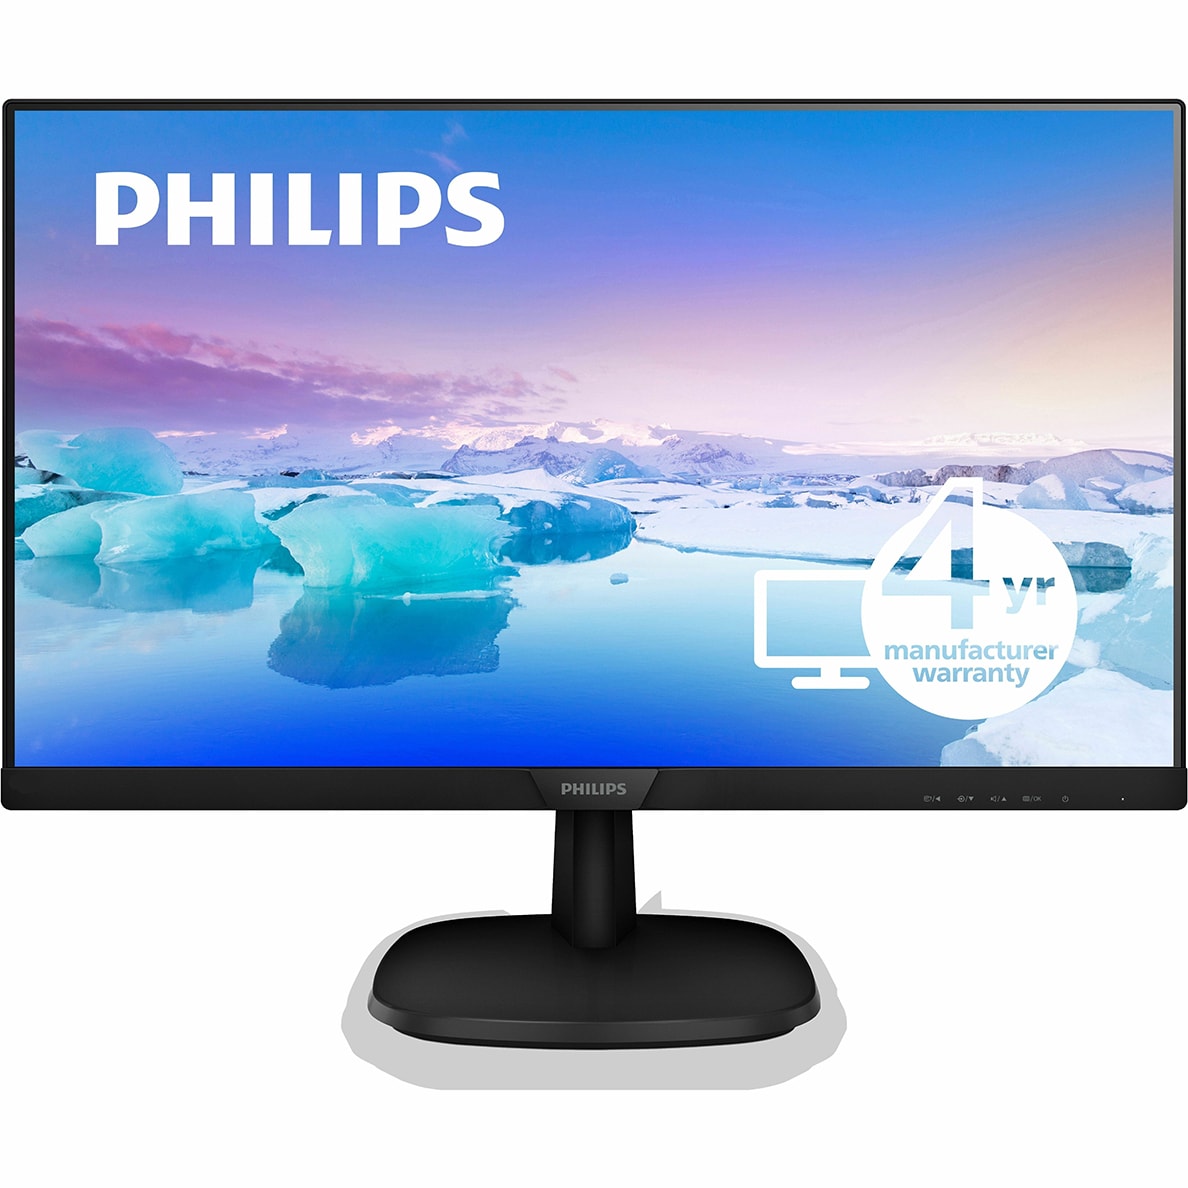 PHILIPS 271V8LBS - 27 inch Monitor, LED, FHD, HDMI, VGA, 4 Year Manufacturer Warranty - 27"